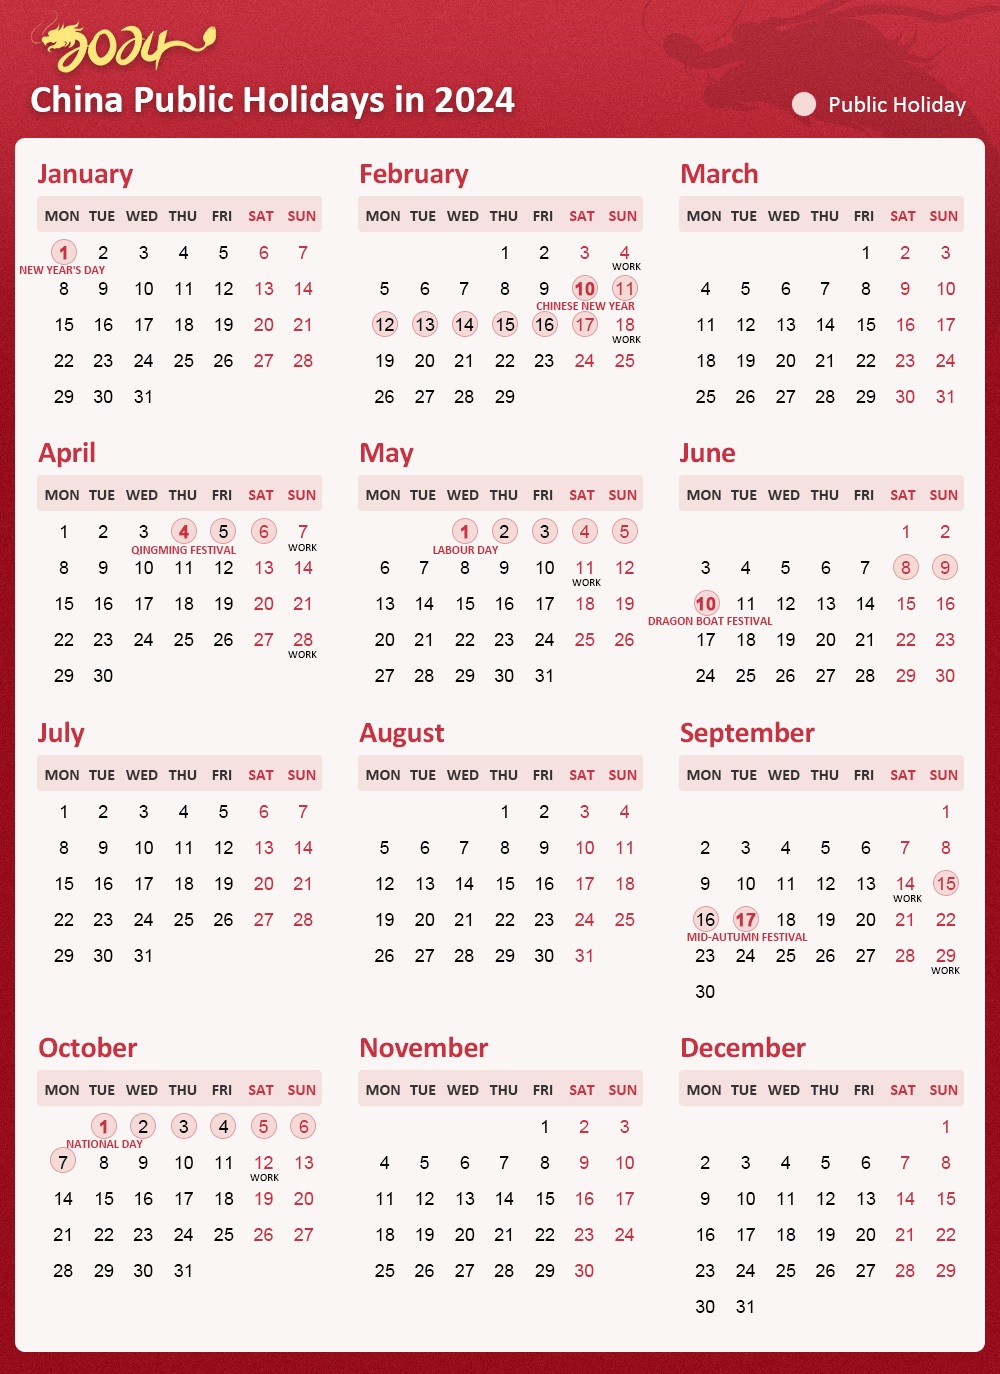 China Public Holidays 2024, Dates, Top Holidays